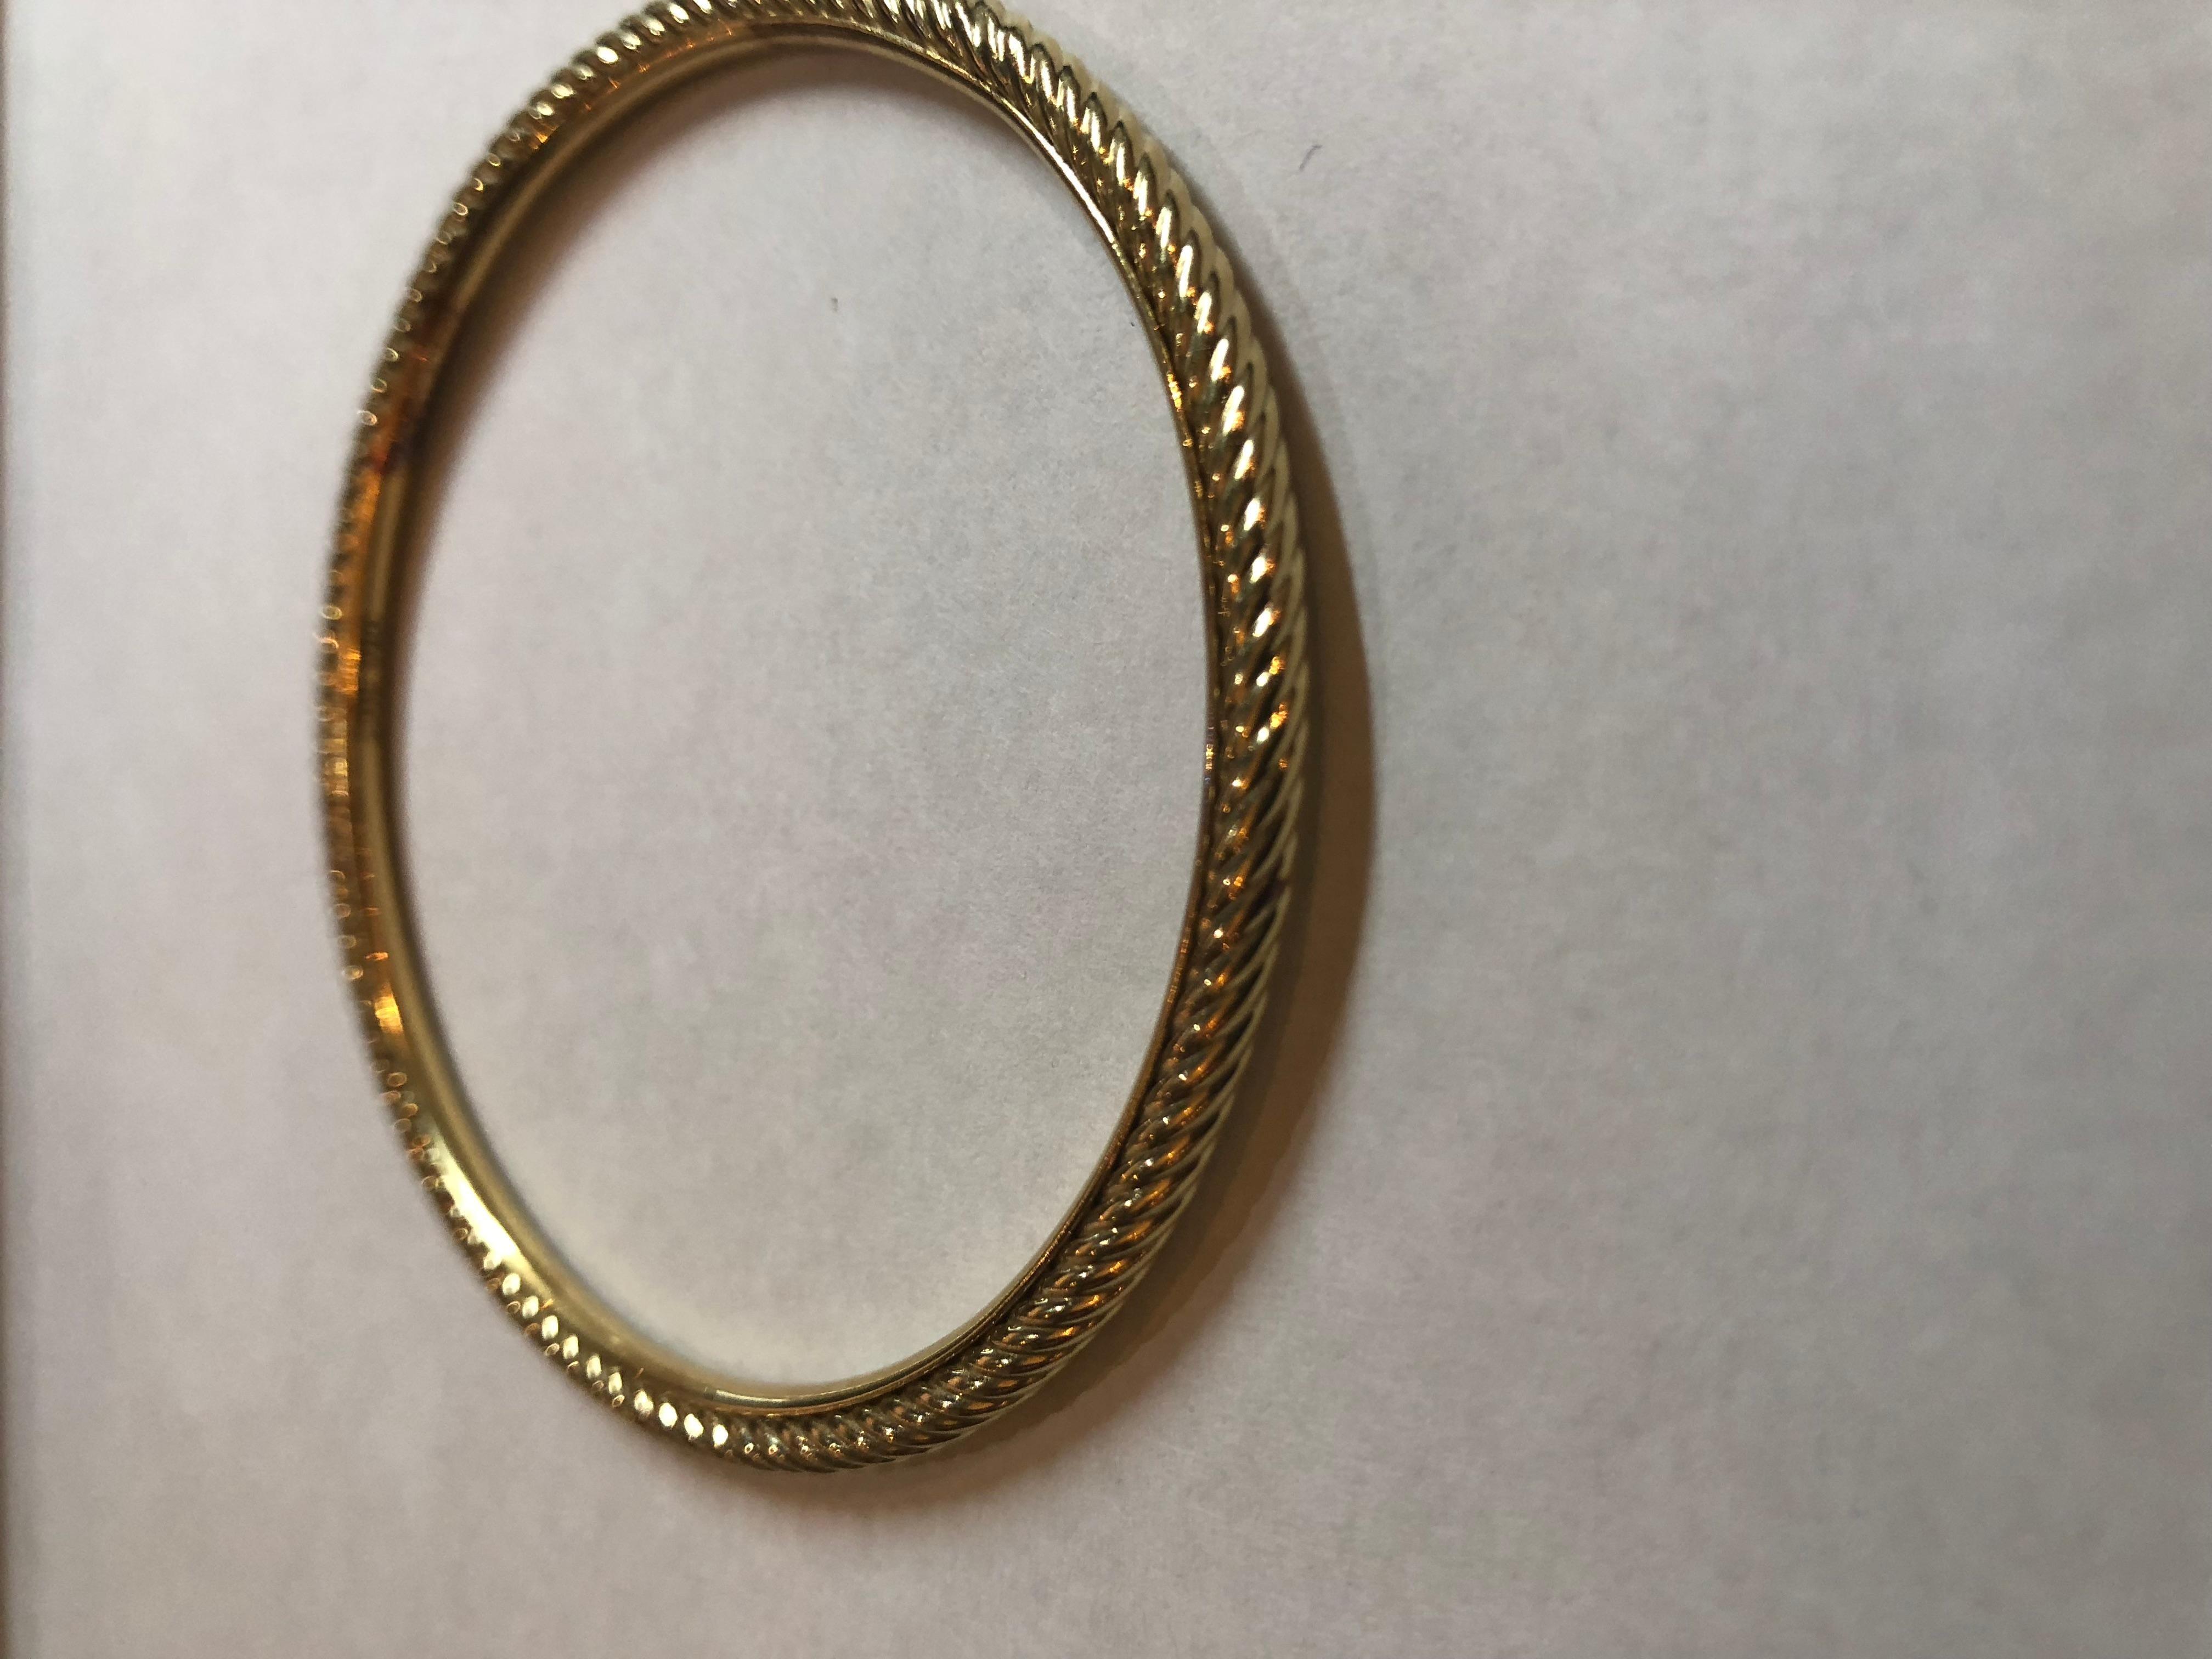 David Yurman Cable and Smooth 18k Gold Thin Bangle Bracelet
10.7 Grams 18k Gold
Signature DY 750